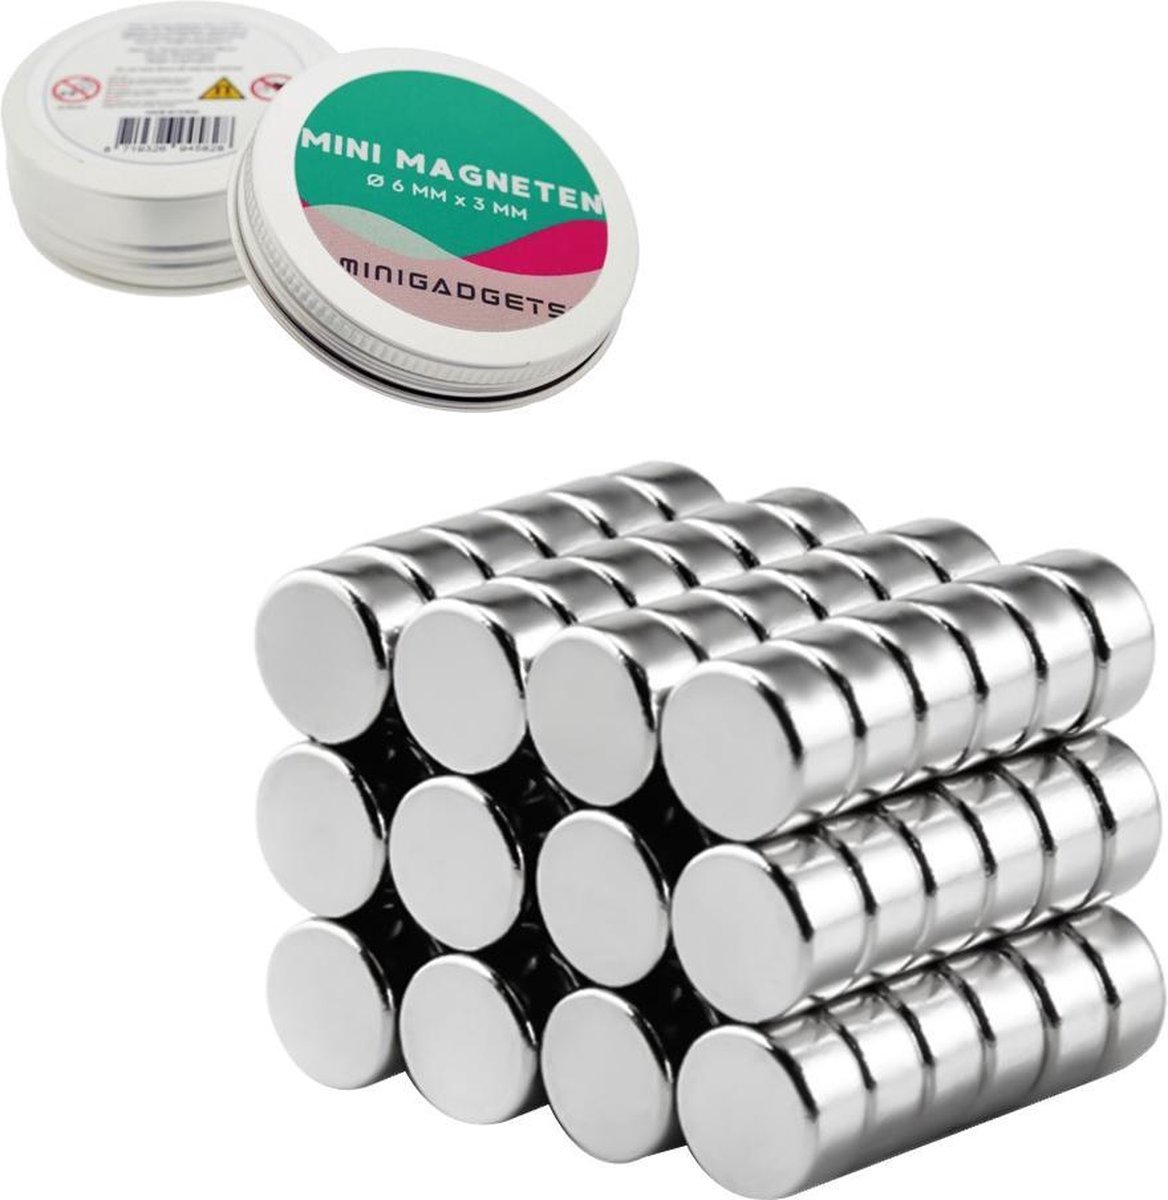 Super sterke magneten - 6 x 3 mm (25-stuks) - Rond - Neodymium - Koelkast magneten - Whiteboard magneten - Klein - Ronde - 6x3mm